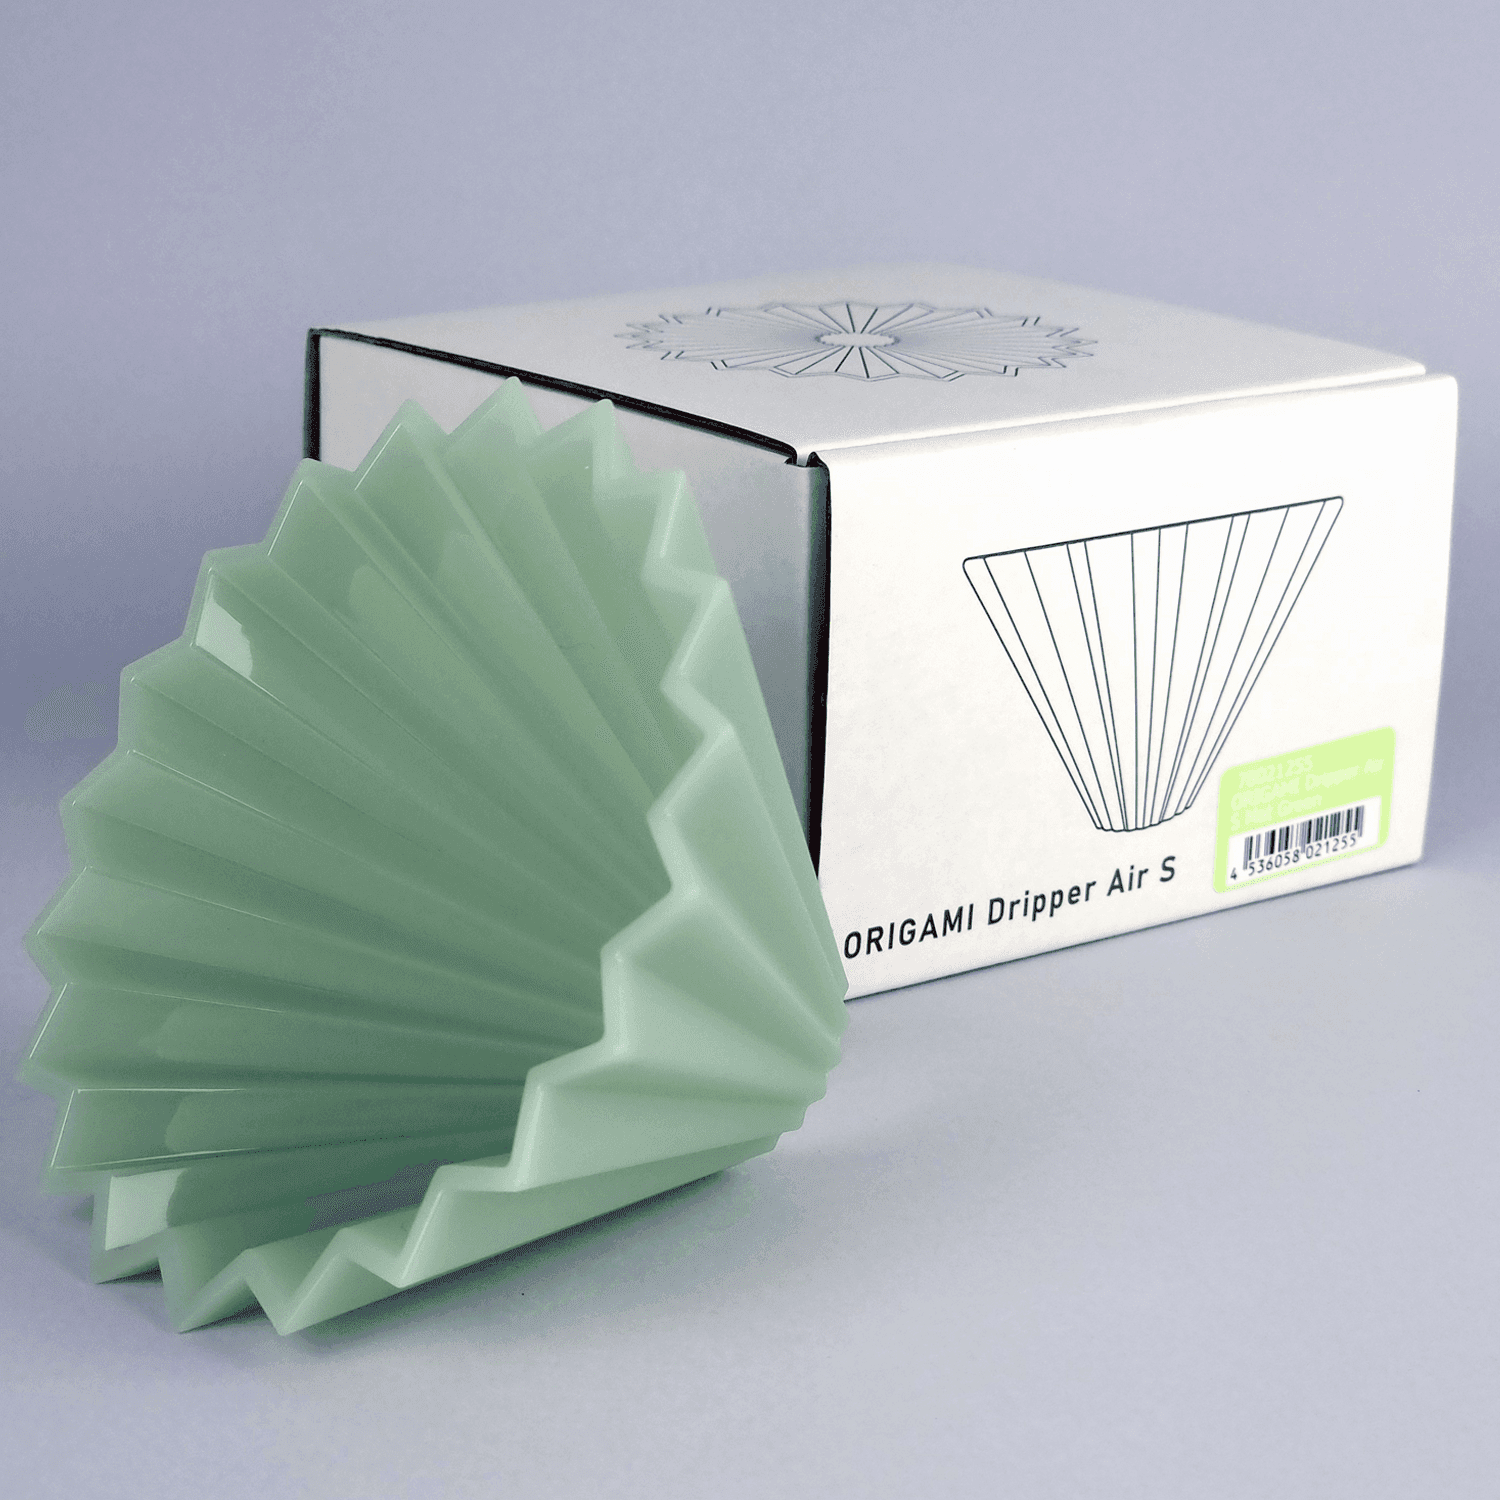 Origami Dripper Air S - Origami - COFFTOK™